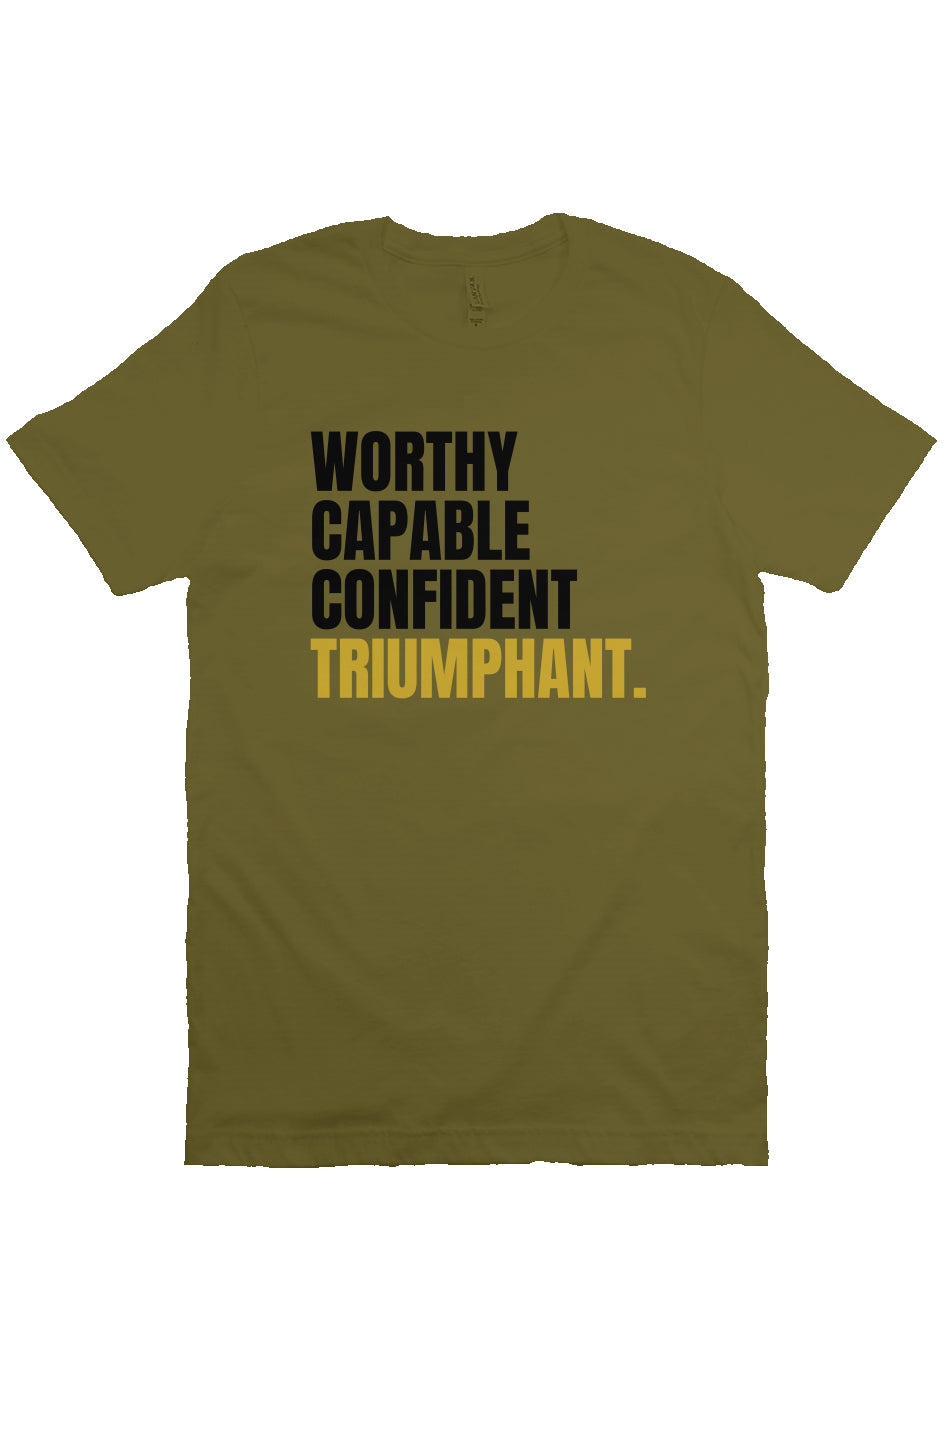 Worthy, Capable, Confident, Triumphant. | Triumphant Tee